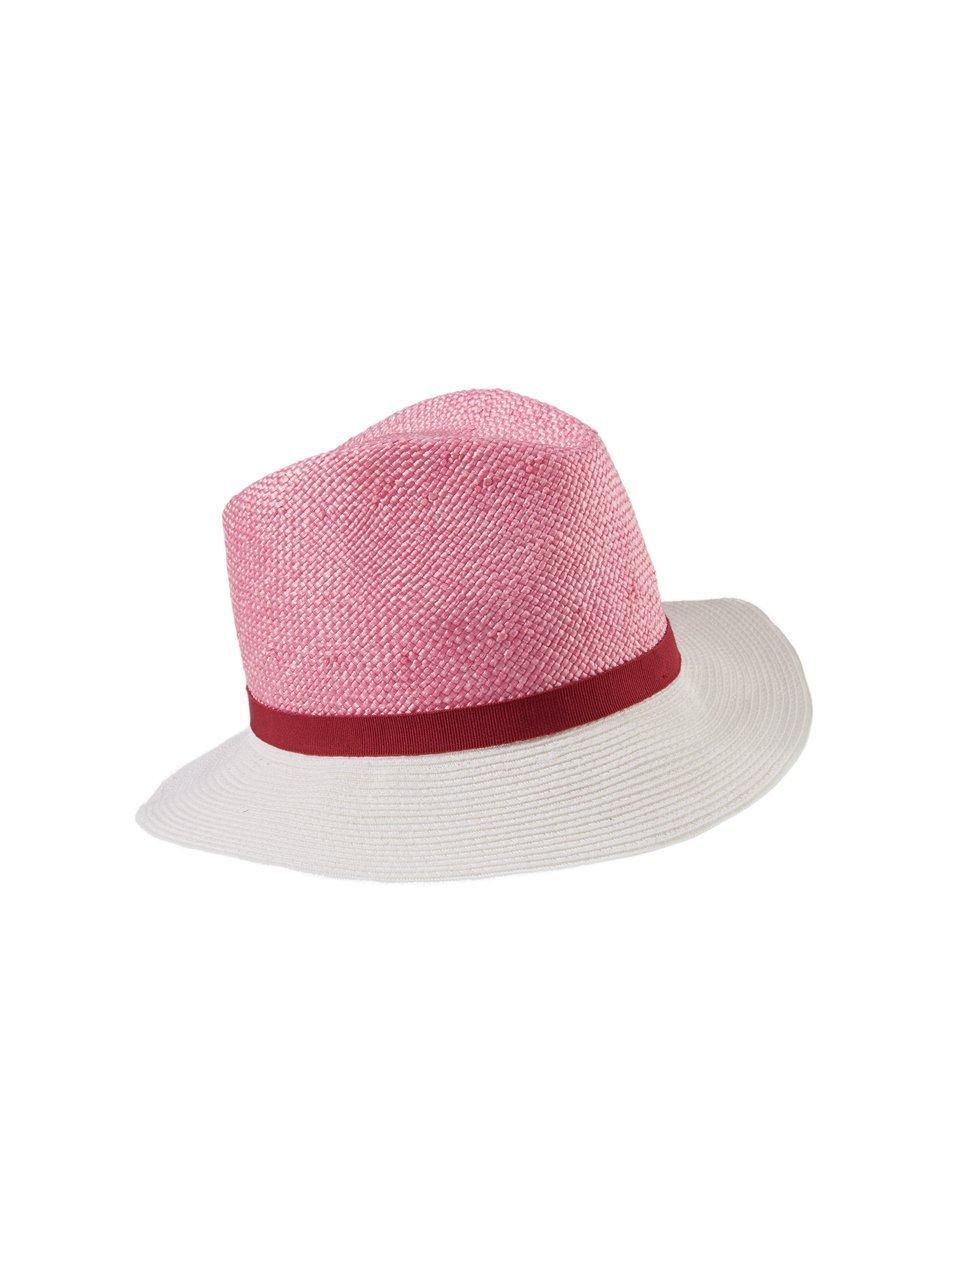 Hoed hoedenband Van Emilia Lay pink